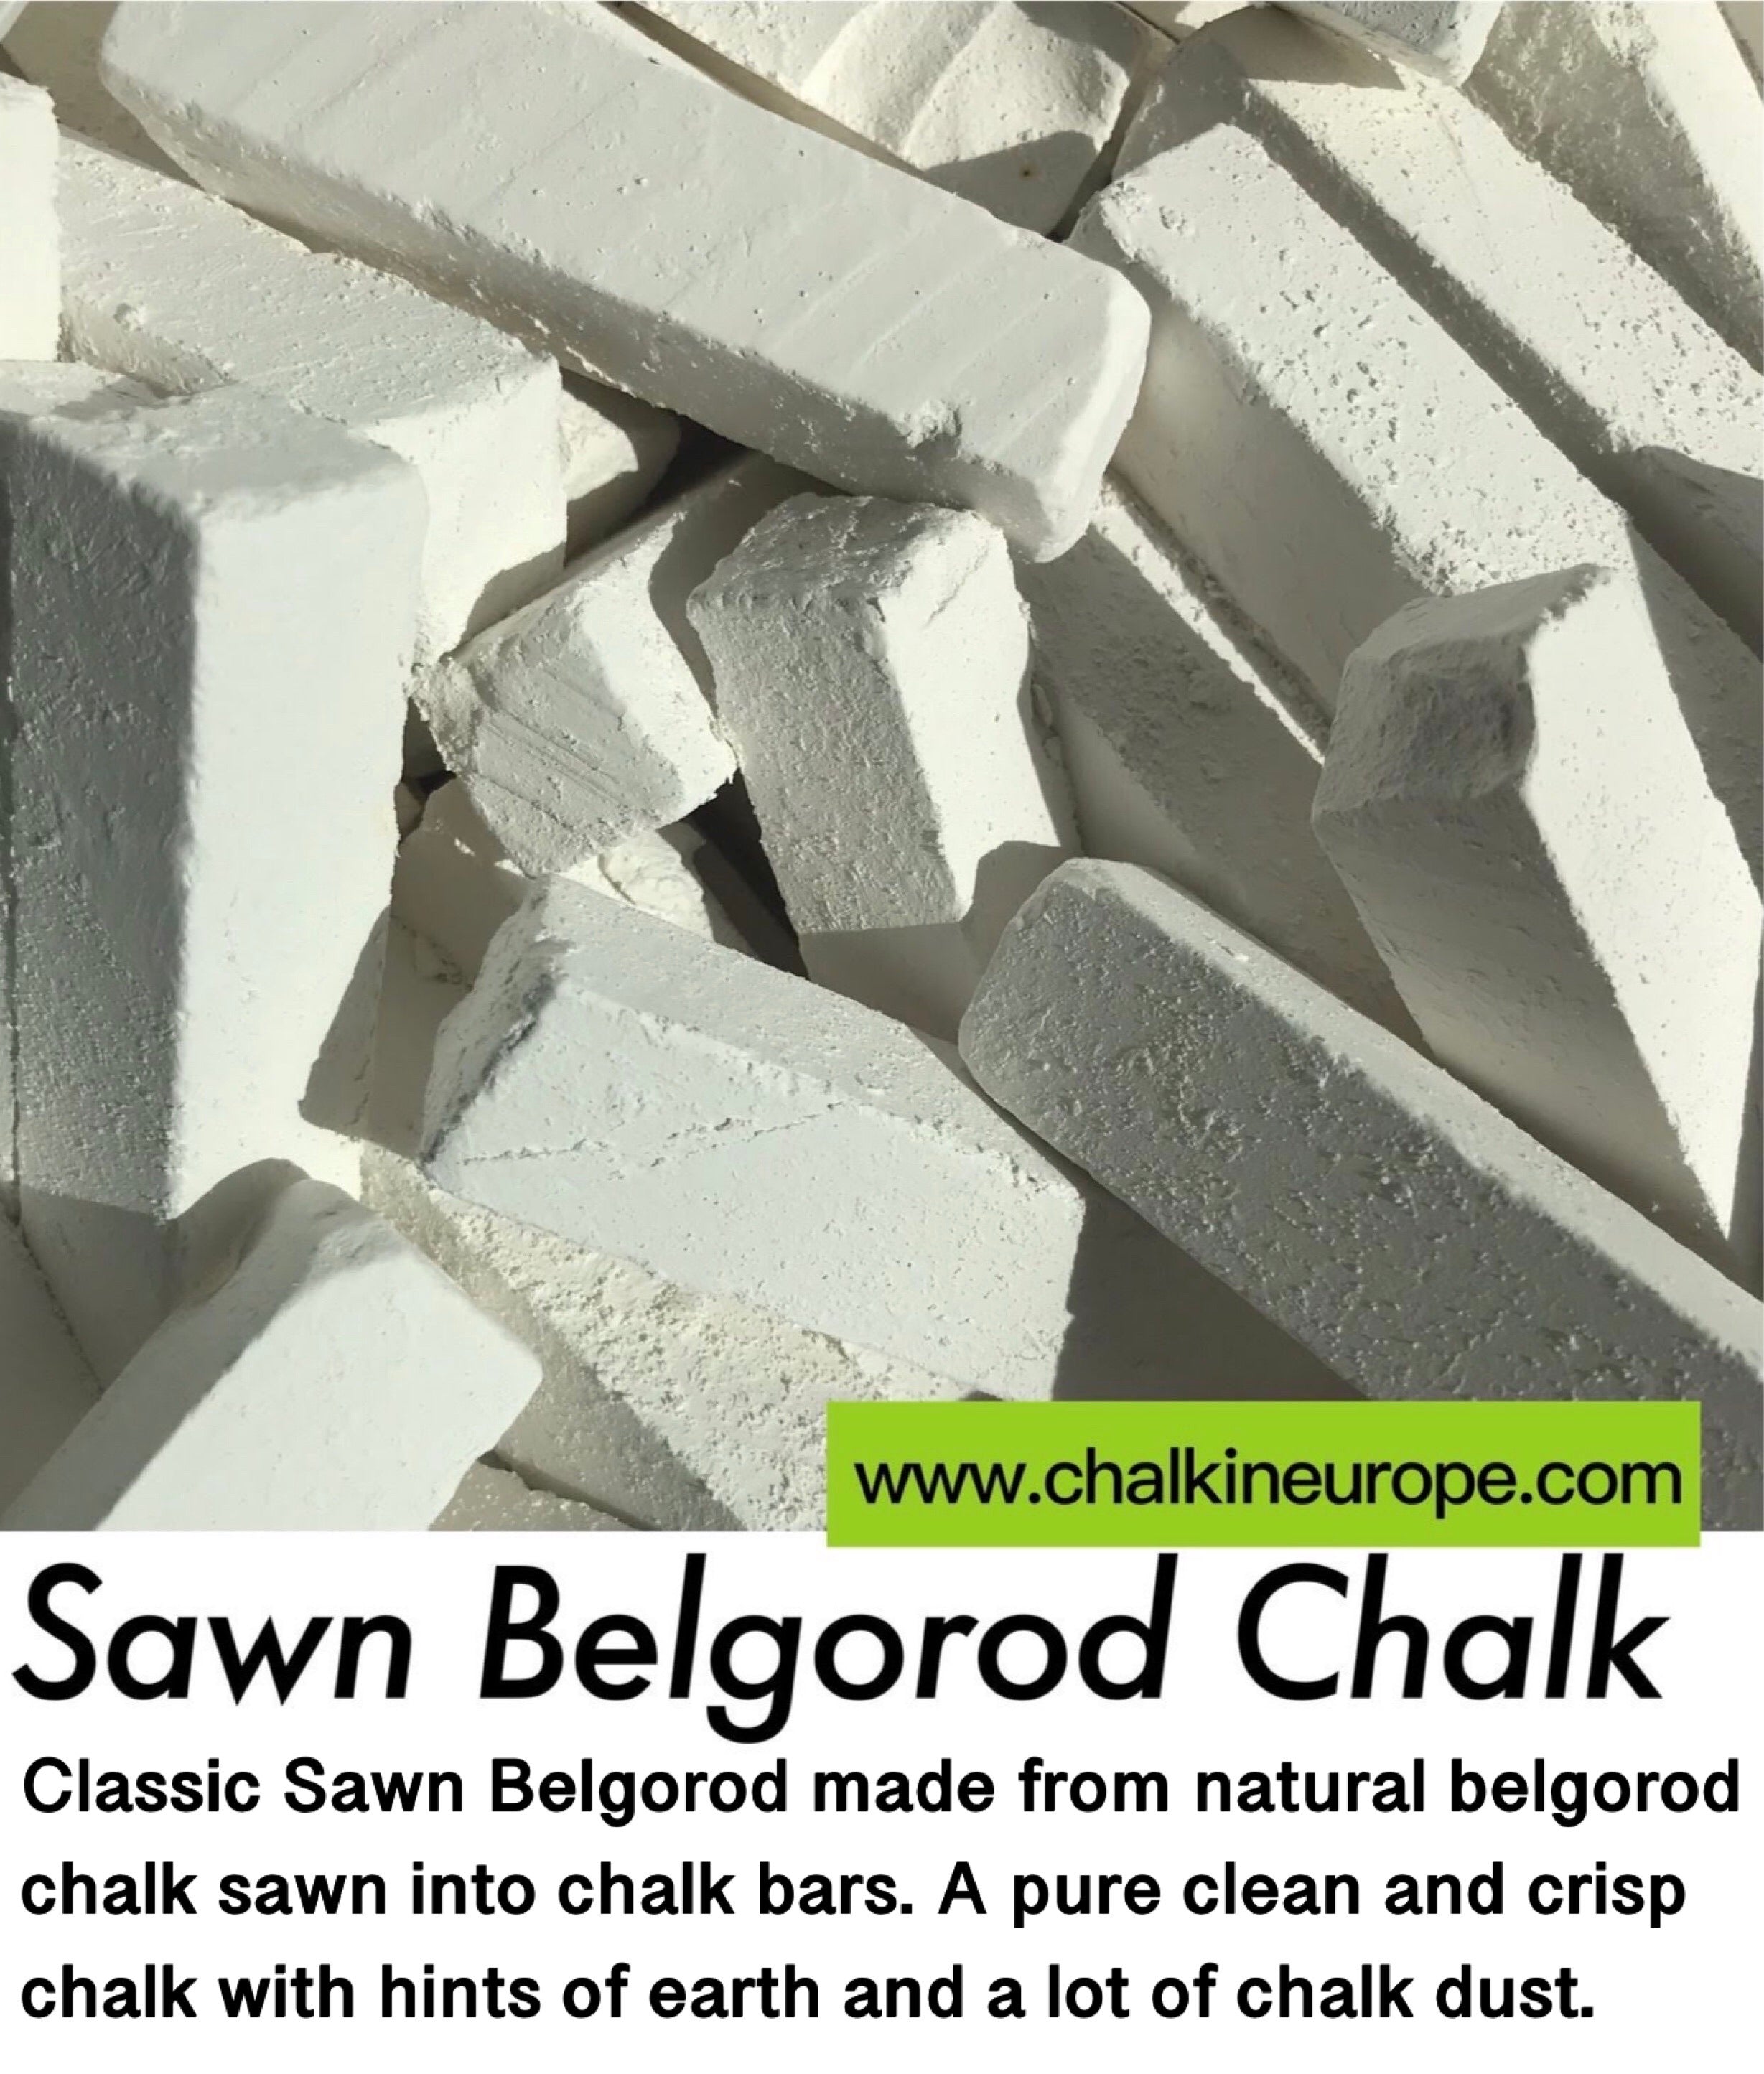 Greenlistsoap Chalk Edible, Chalk Belgorod 8oz, (250 GR) Natural Chalk, Chalk Food, Chalk for Eating